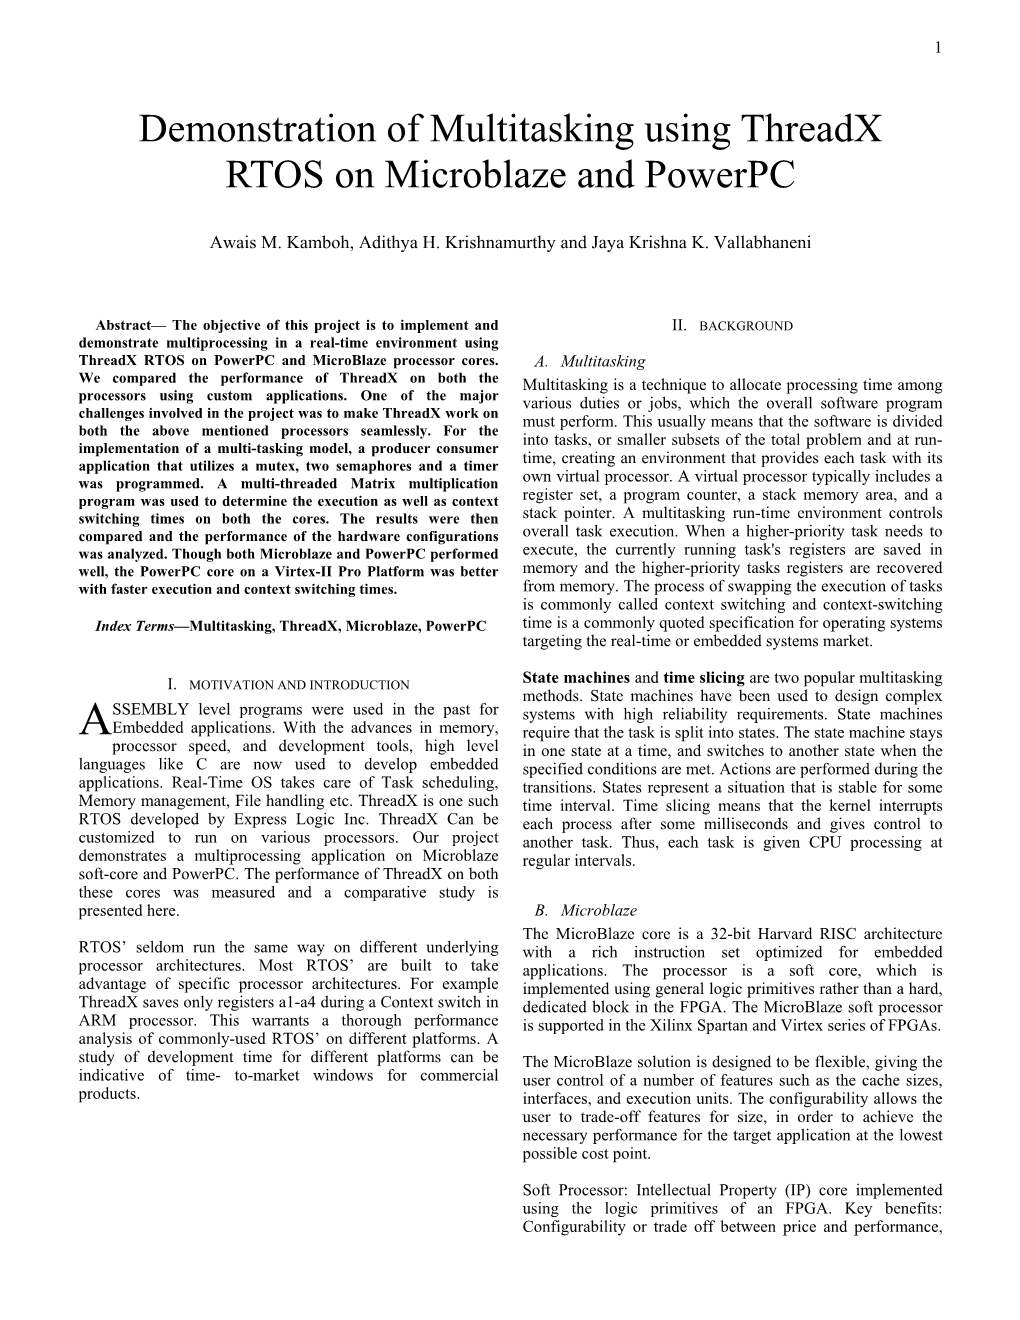 Demonstration of Multitasking Using Threadx RTOS on Microblaze and Powerpc